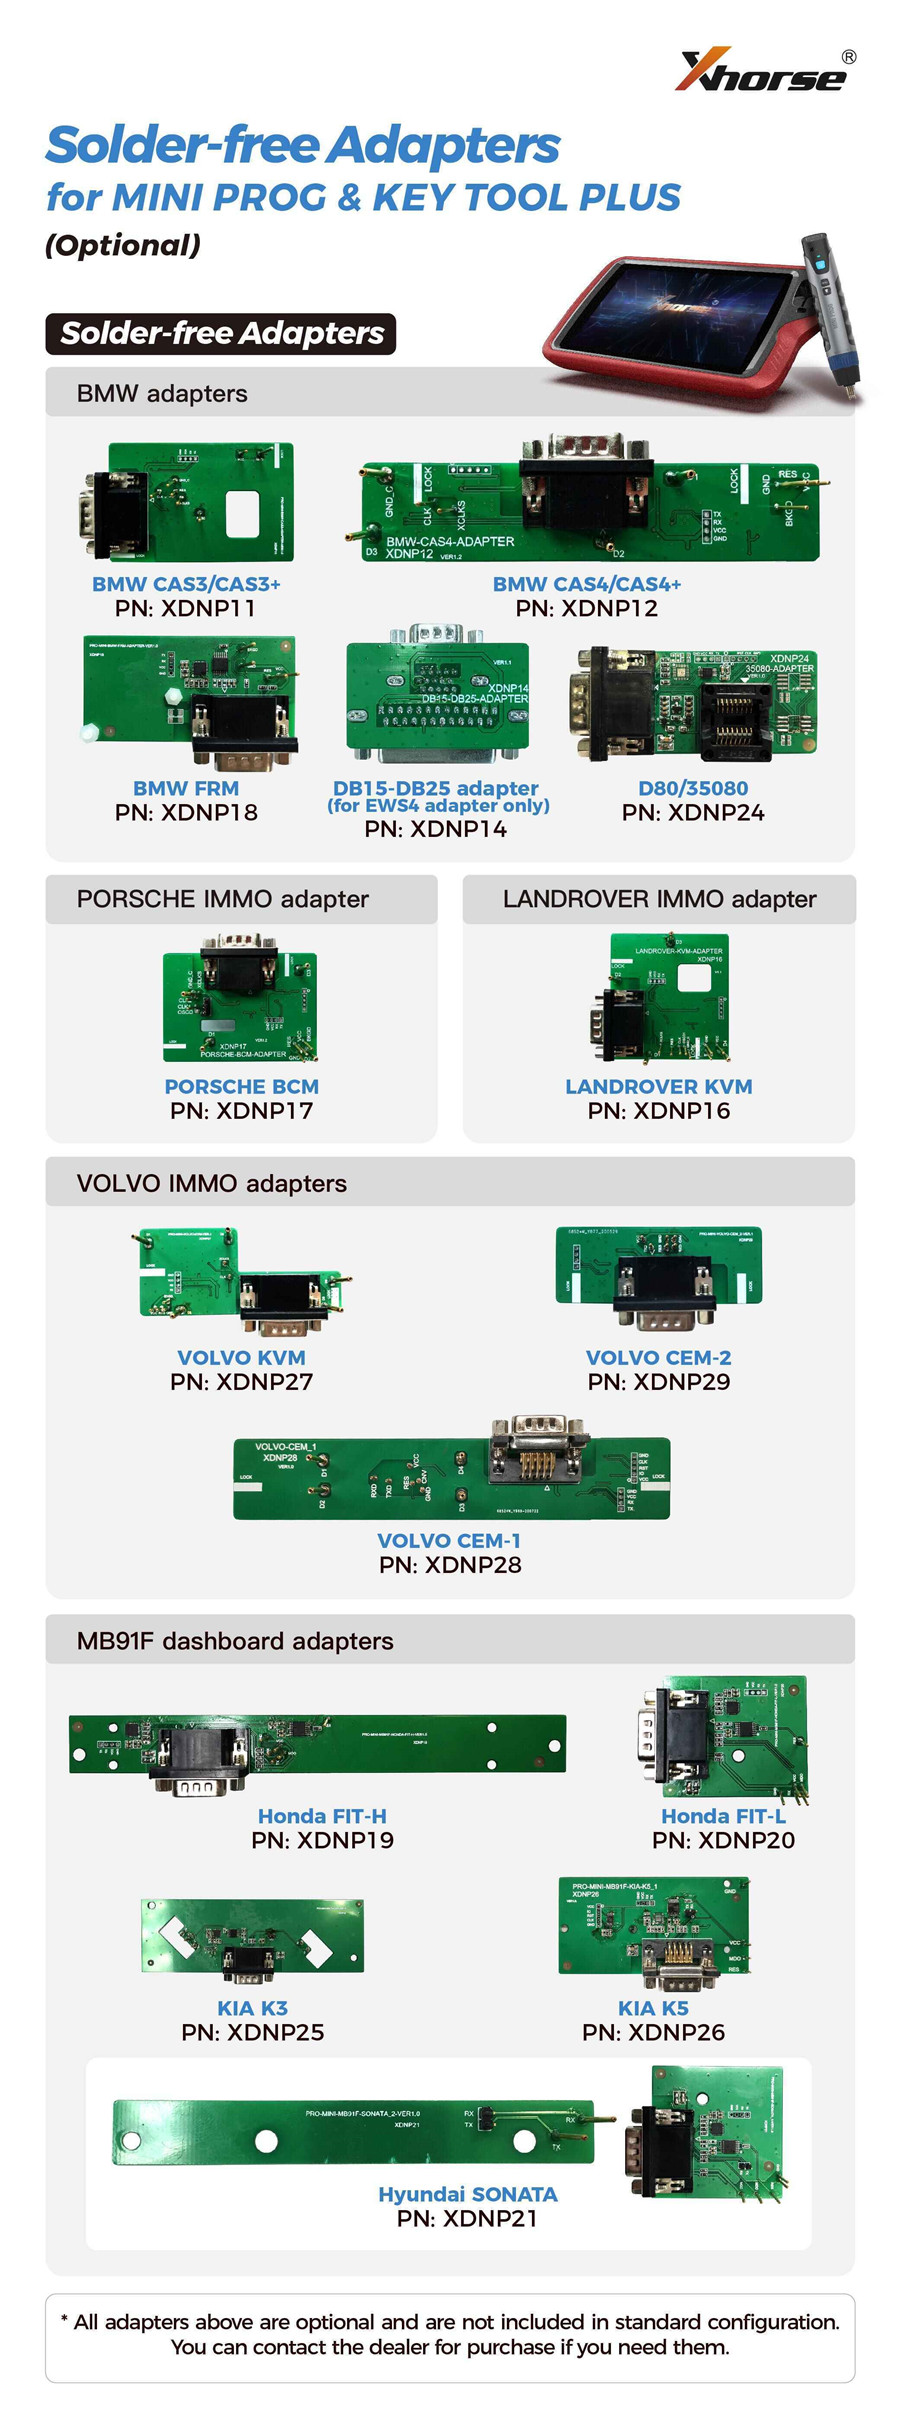 Xhorse MINI PROG Solder-Free Adapters